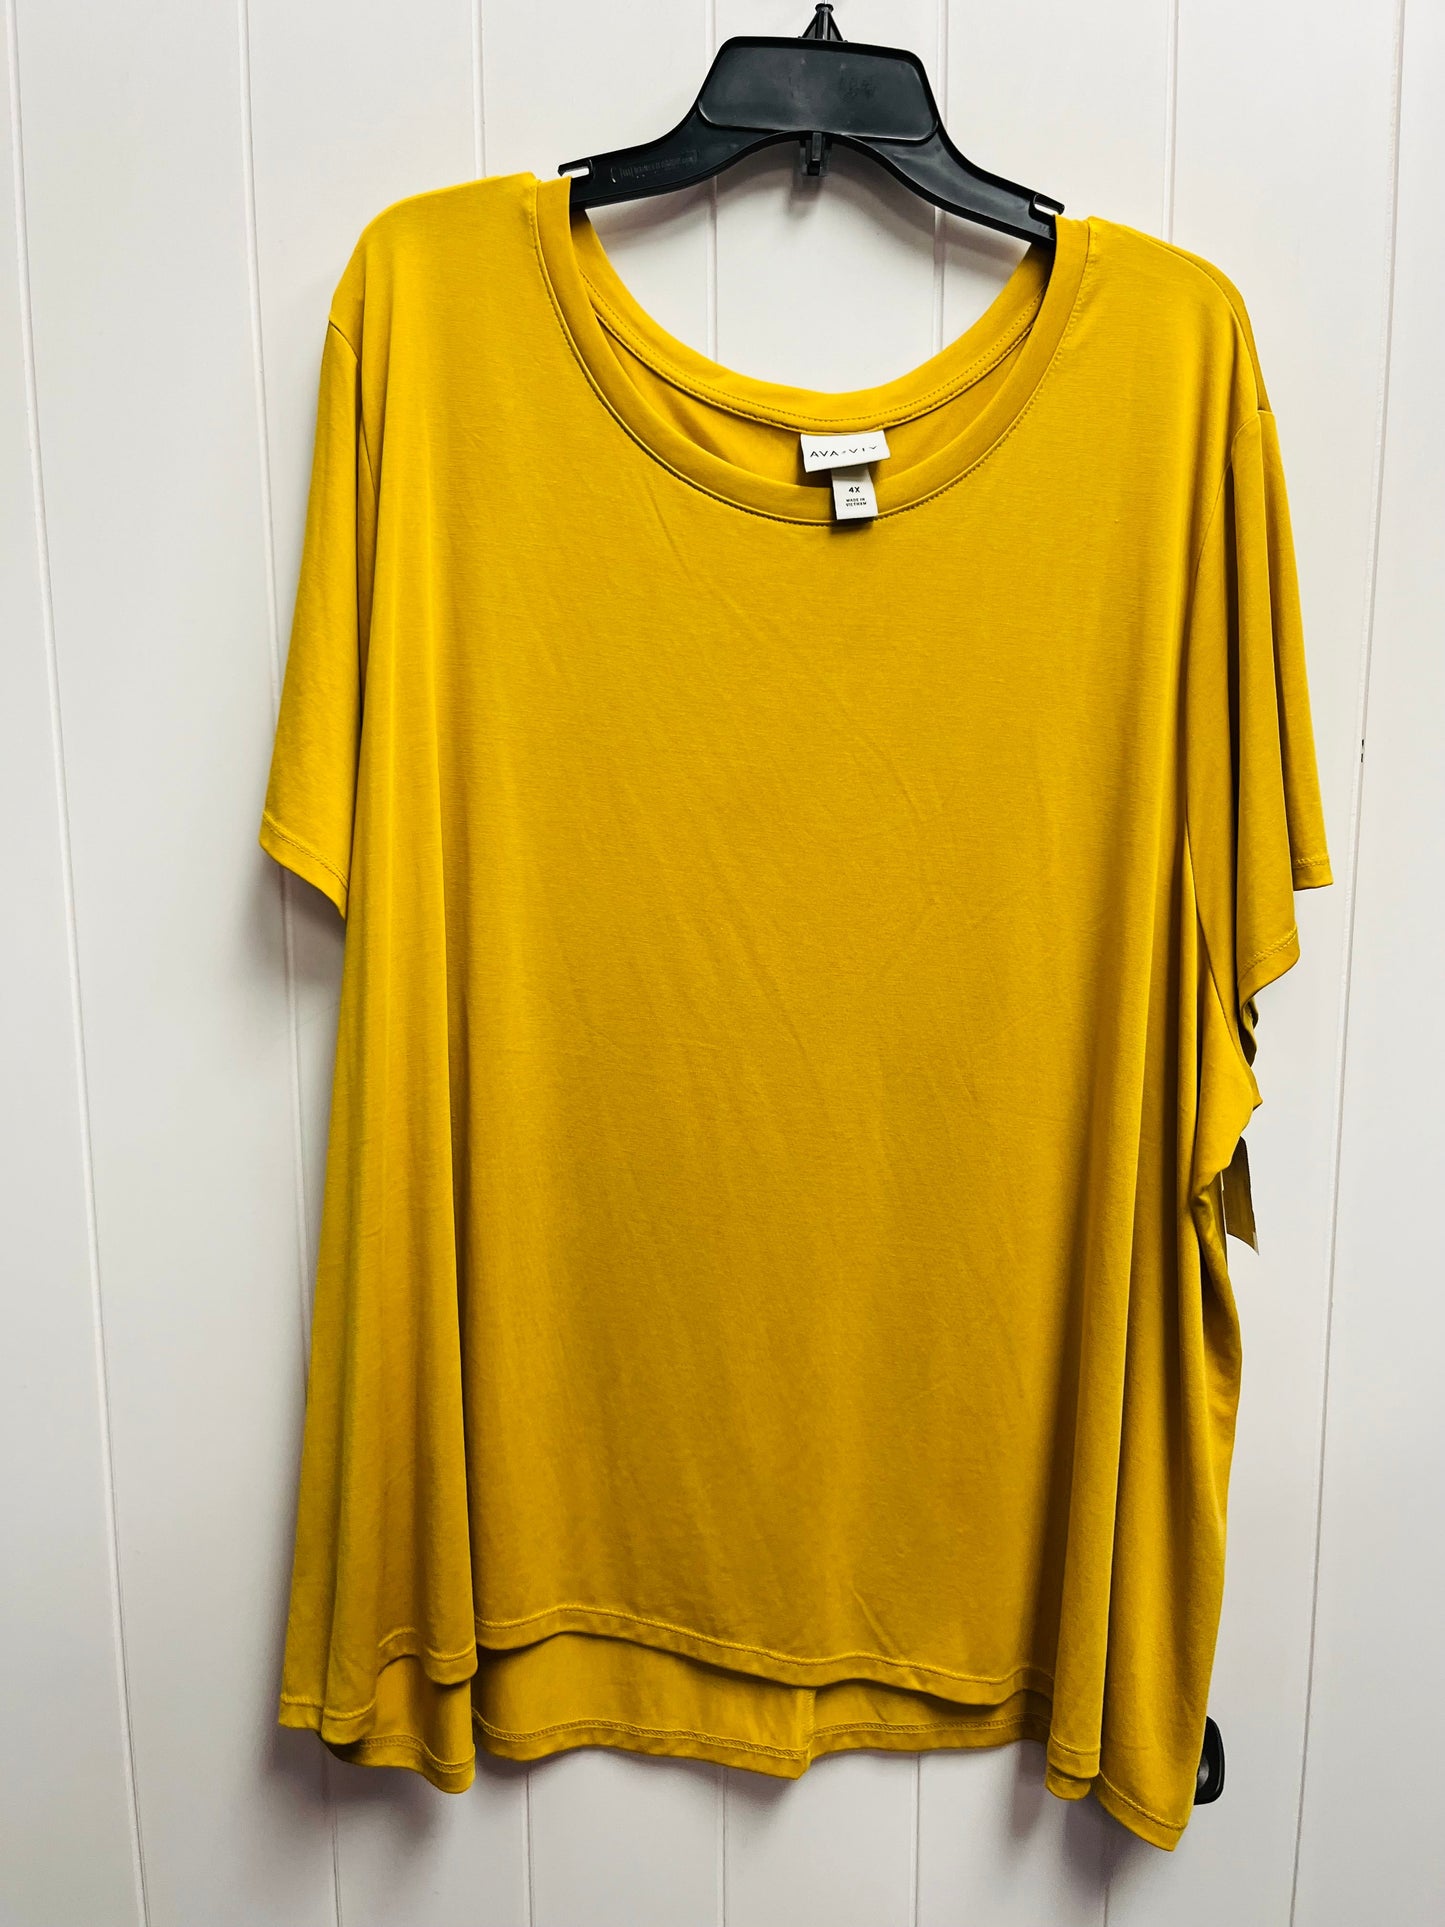 Yellow Top Short Sleeve Basic Ava & Viv, Size 4x